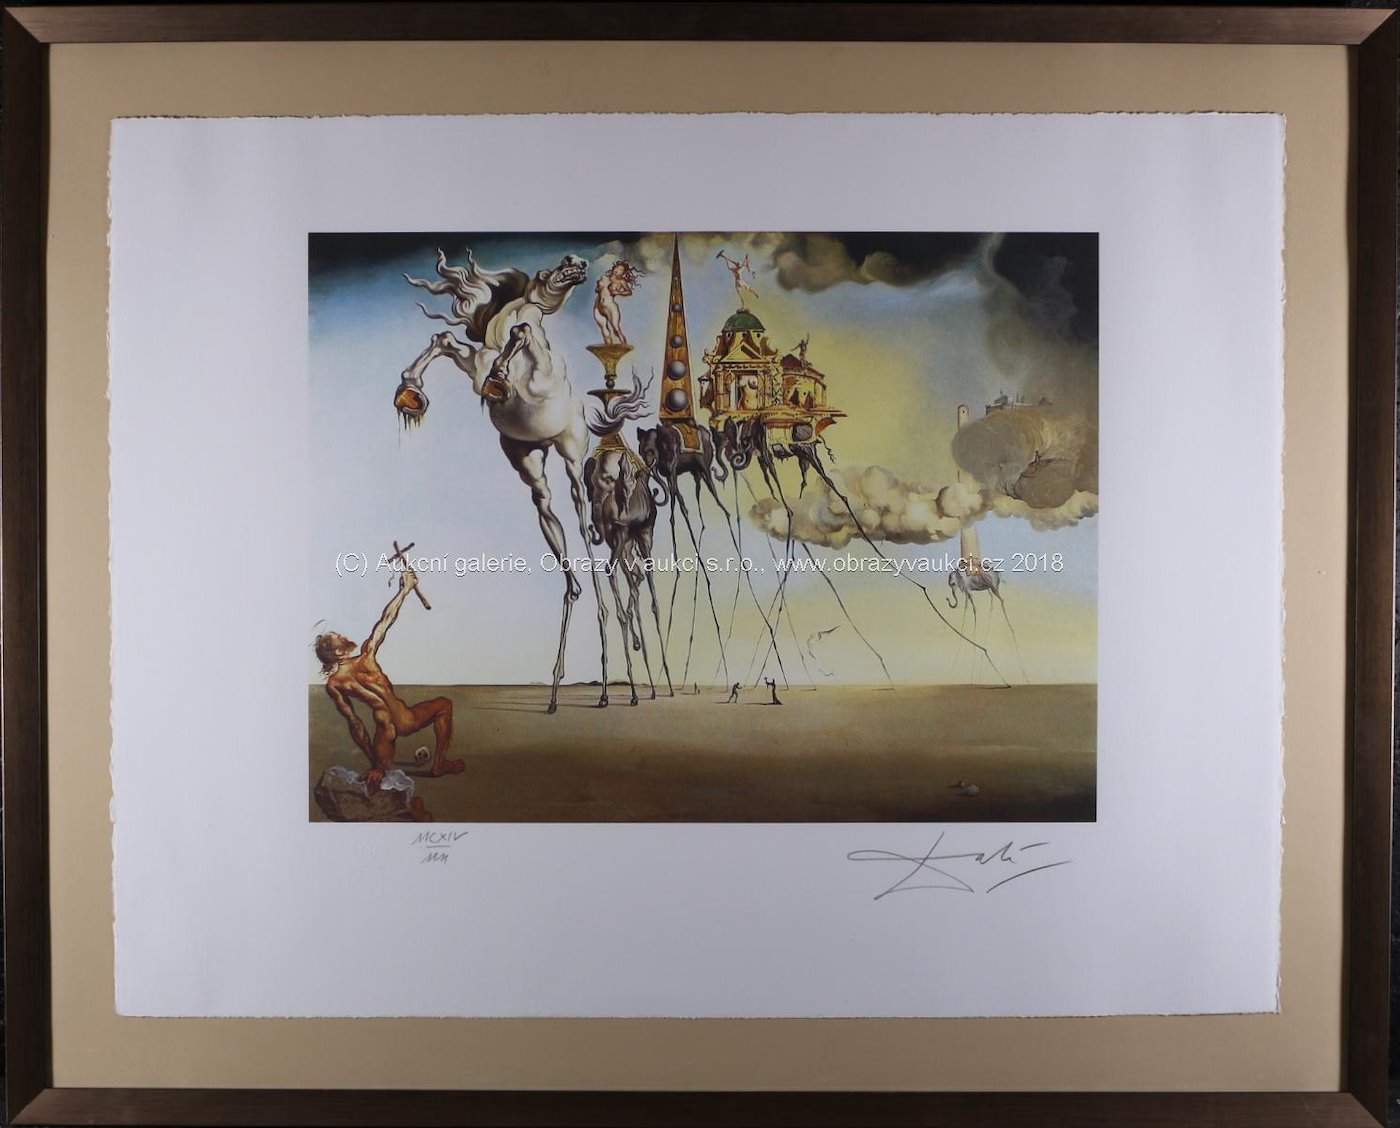 Salvador Dalí - The templation of St. Anthony